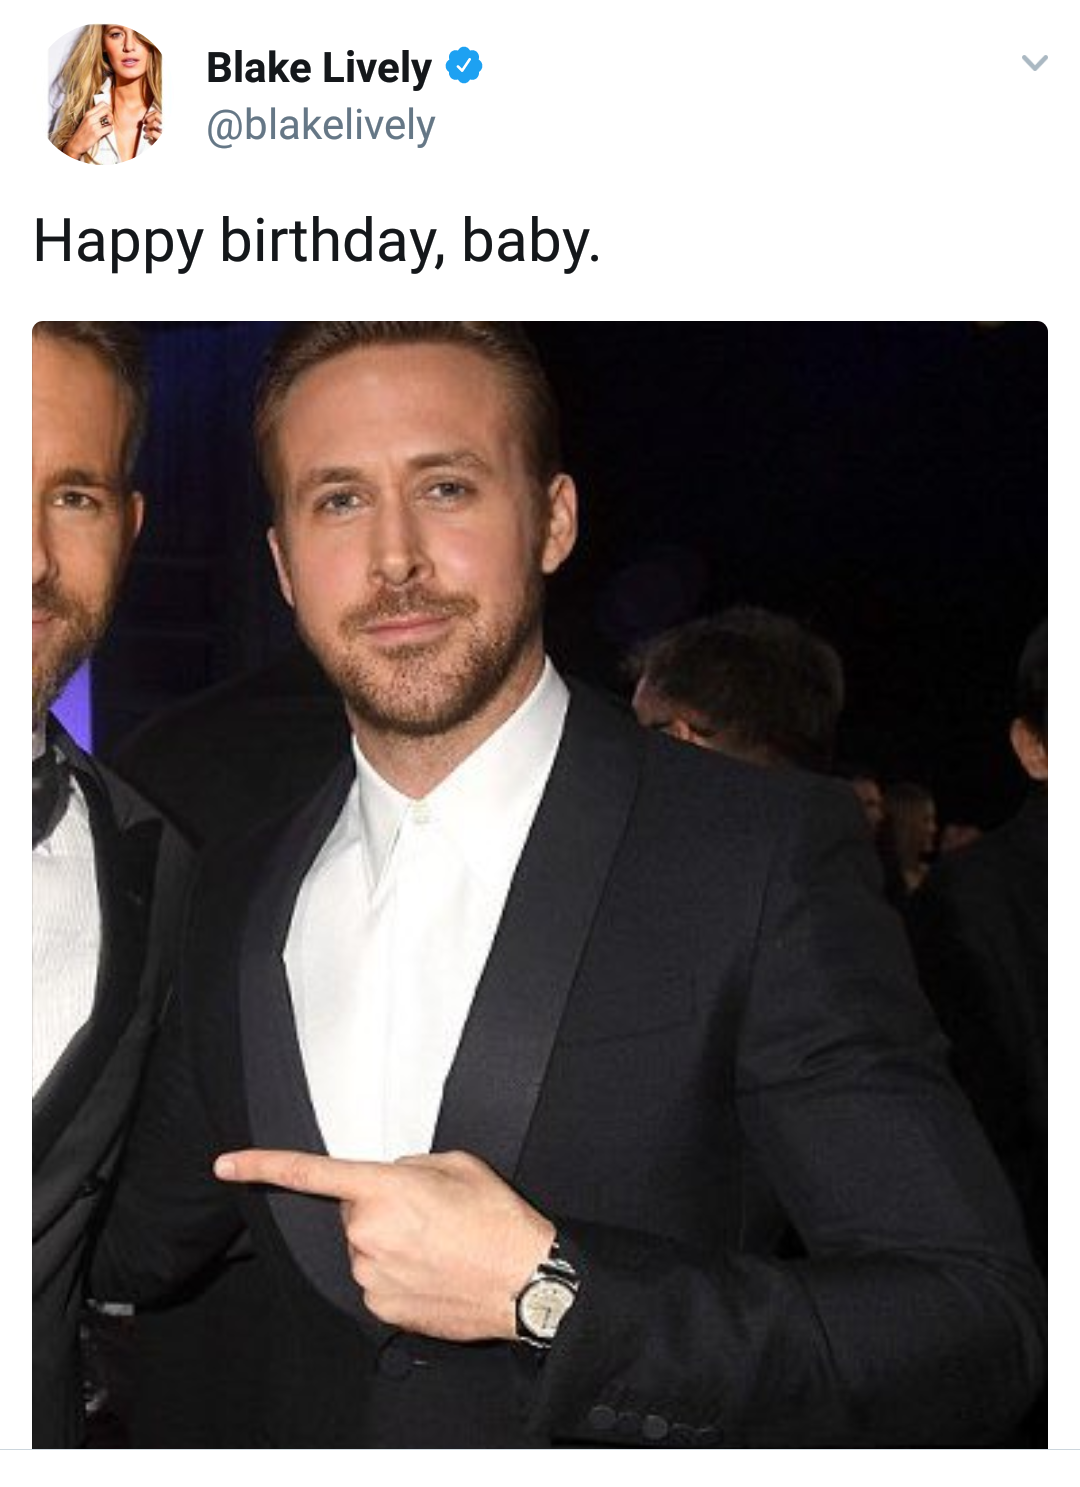 Wishing her husband, Ryan Reynolds a happy birthday